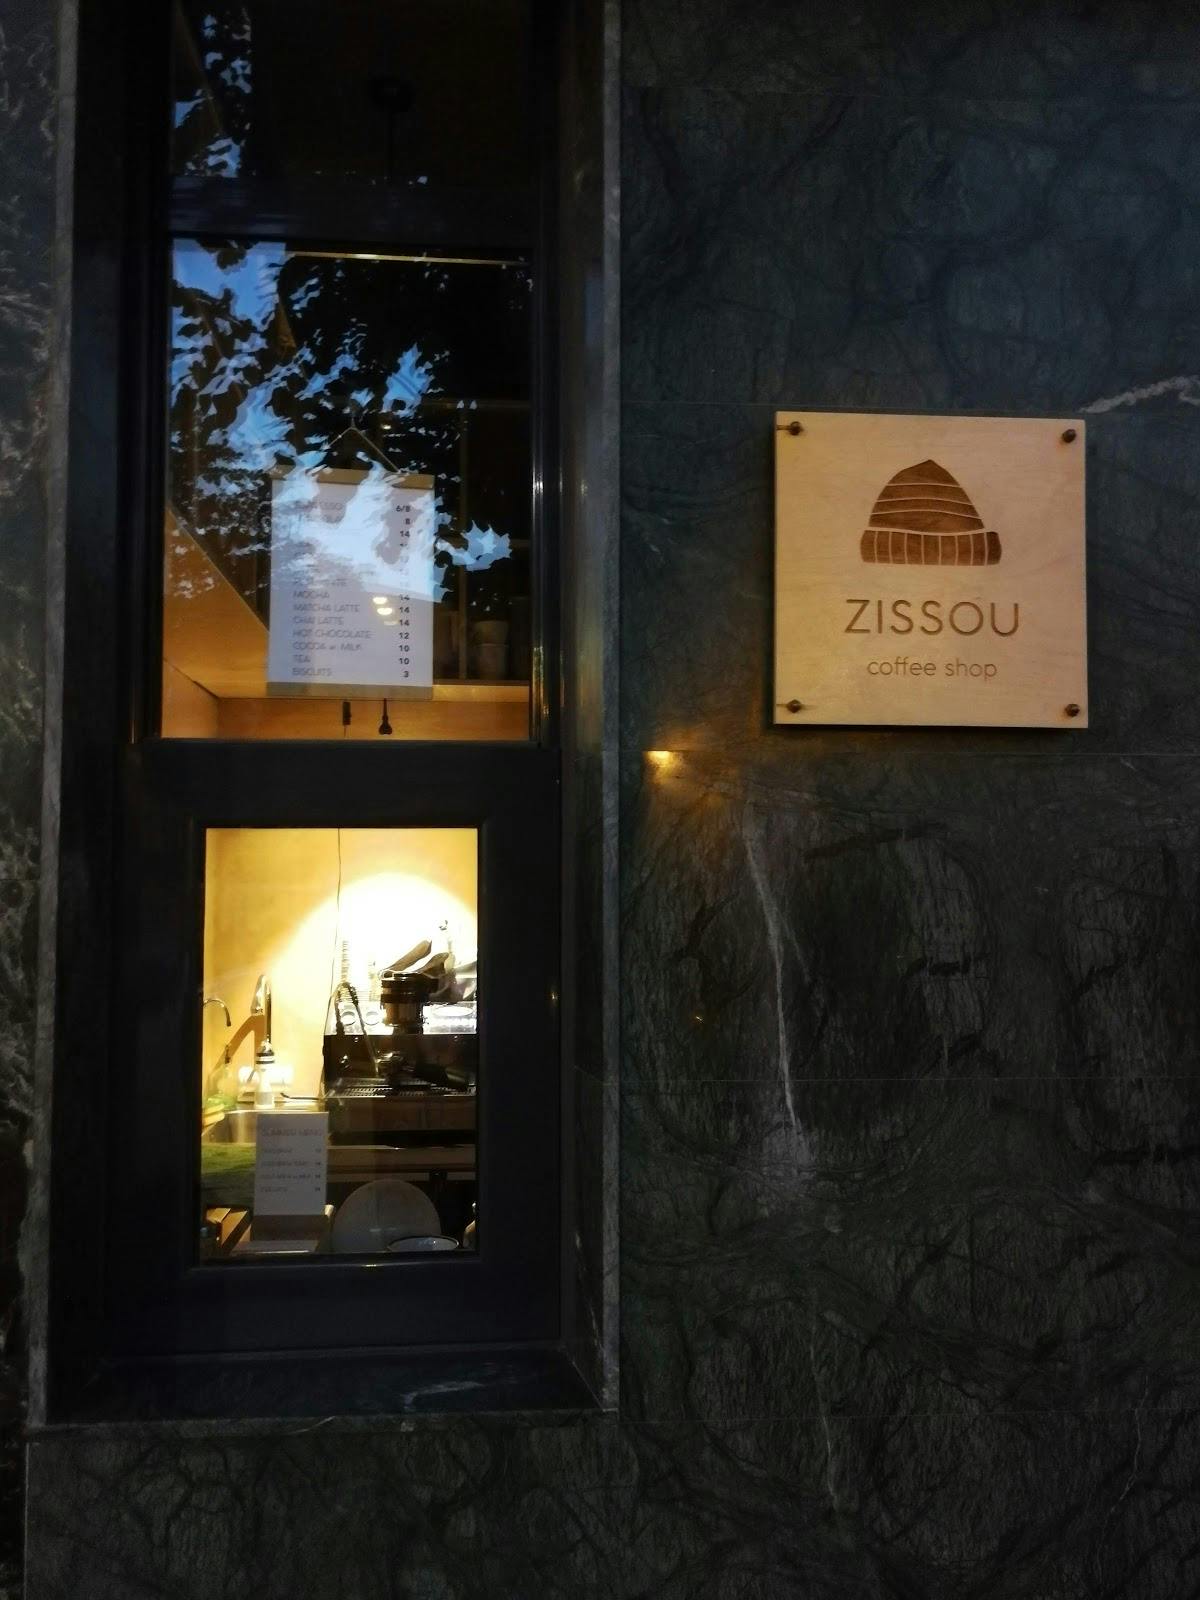 Image - ZISSOU Coffee Shop